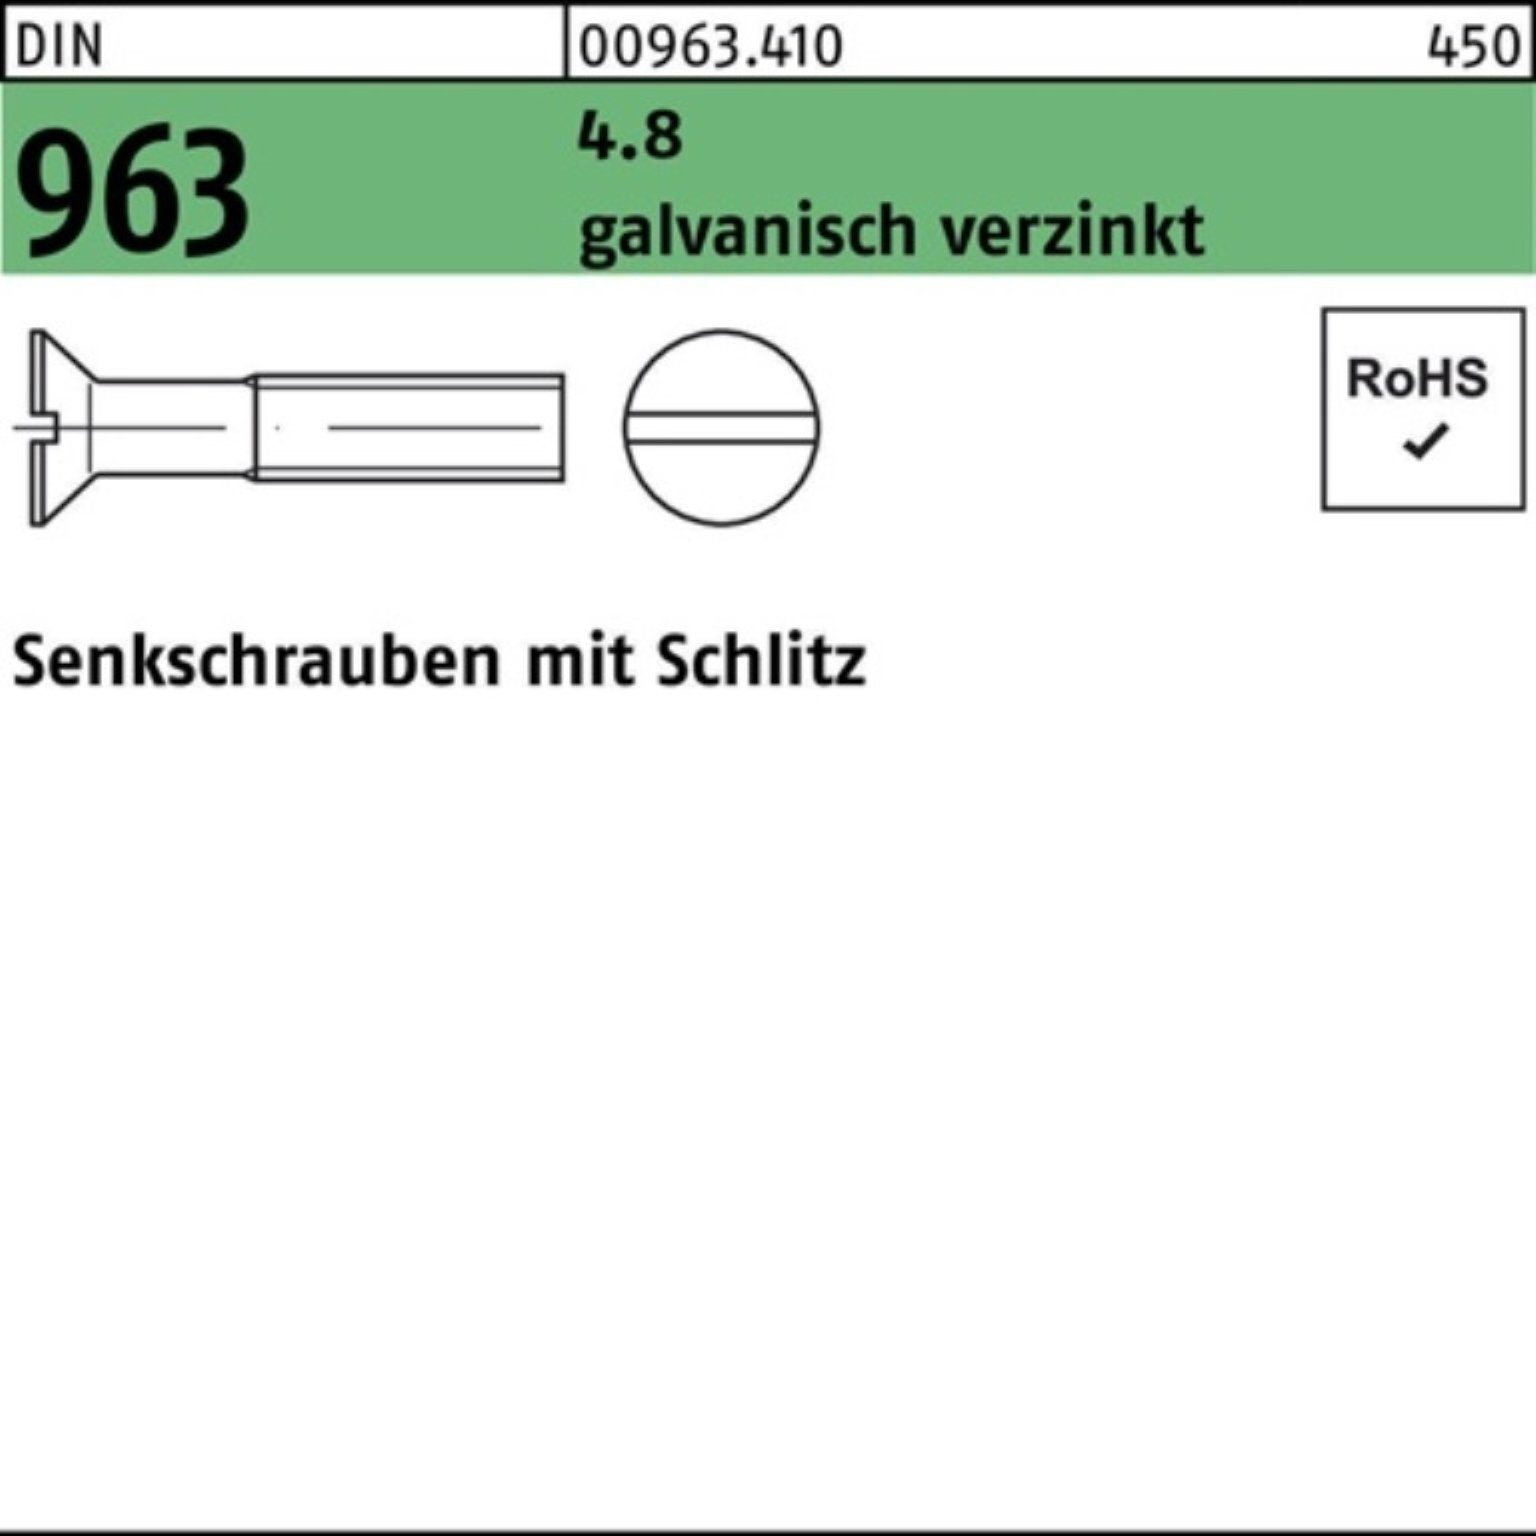 Reyher Senkschraube 100er Pack Senkschraube DIN 963 Schlitz M8x 10 4.8 galv.verz. 100 Stü